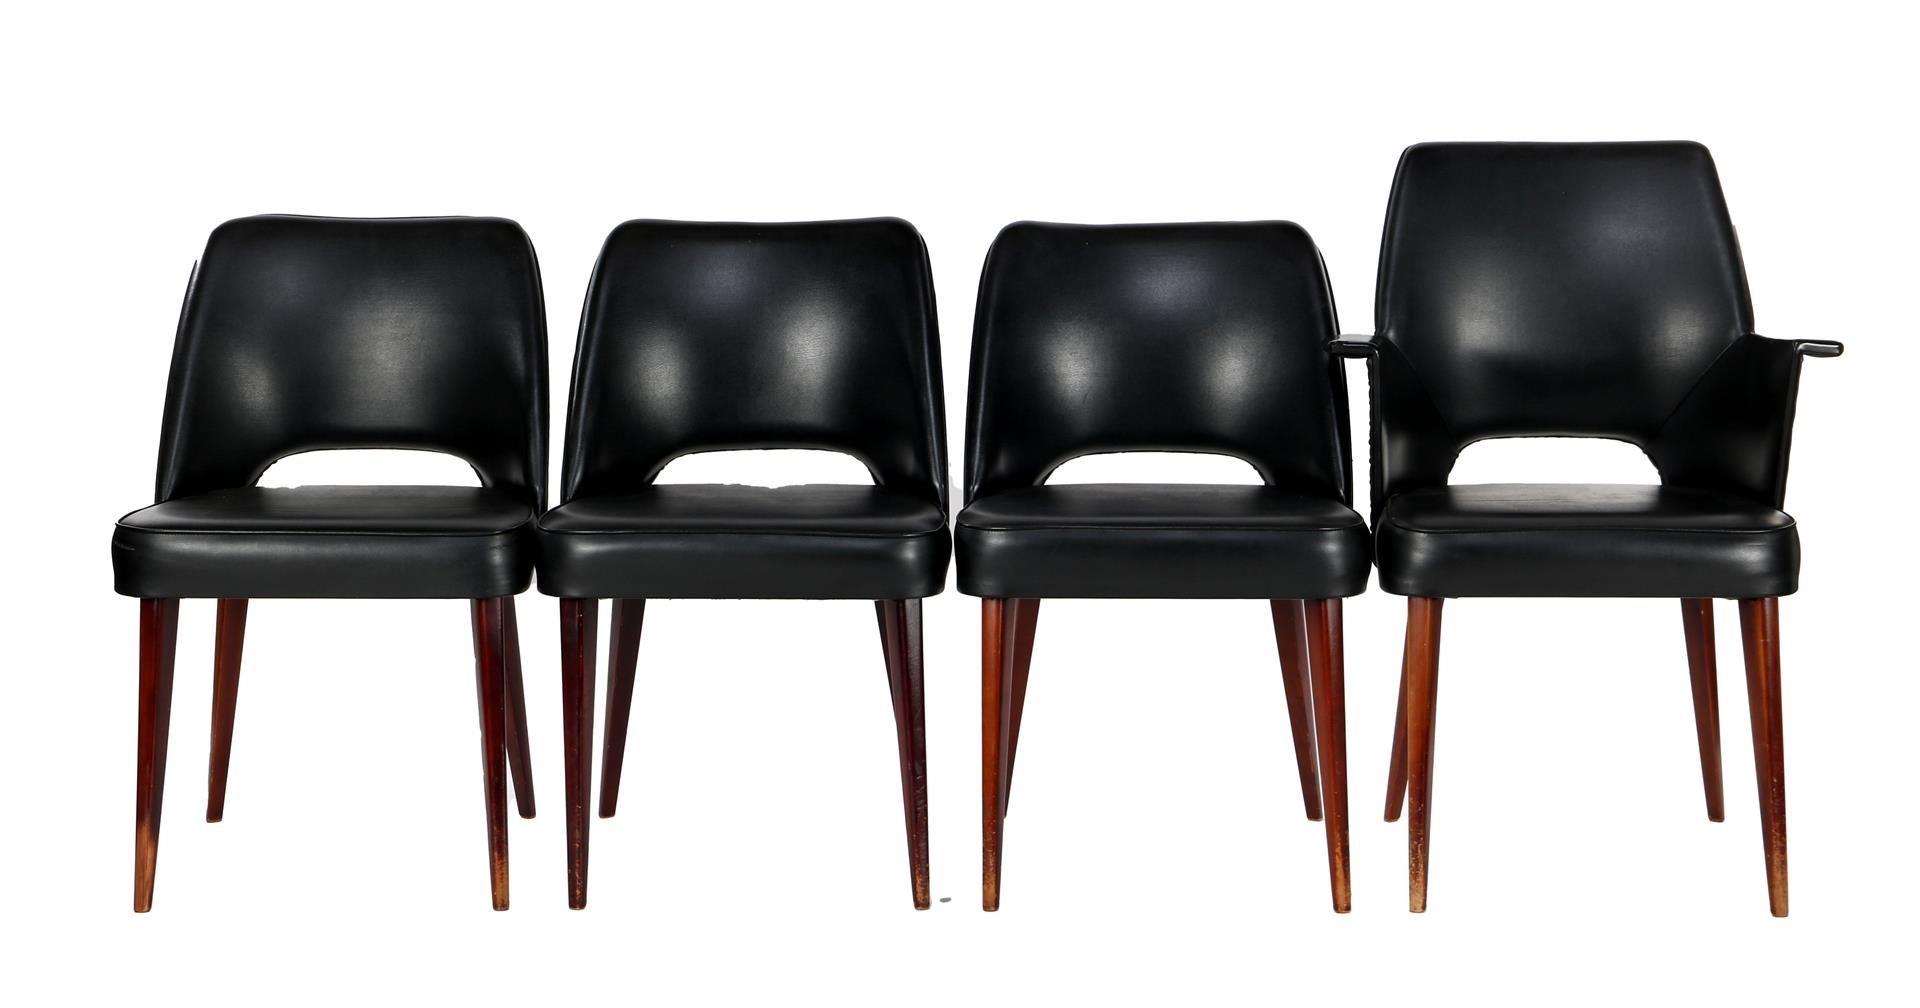 4 artificial leather chairs 4 sedie in pelle artificiale nera, di cui 1 con brac&hellip;